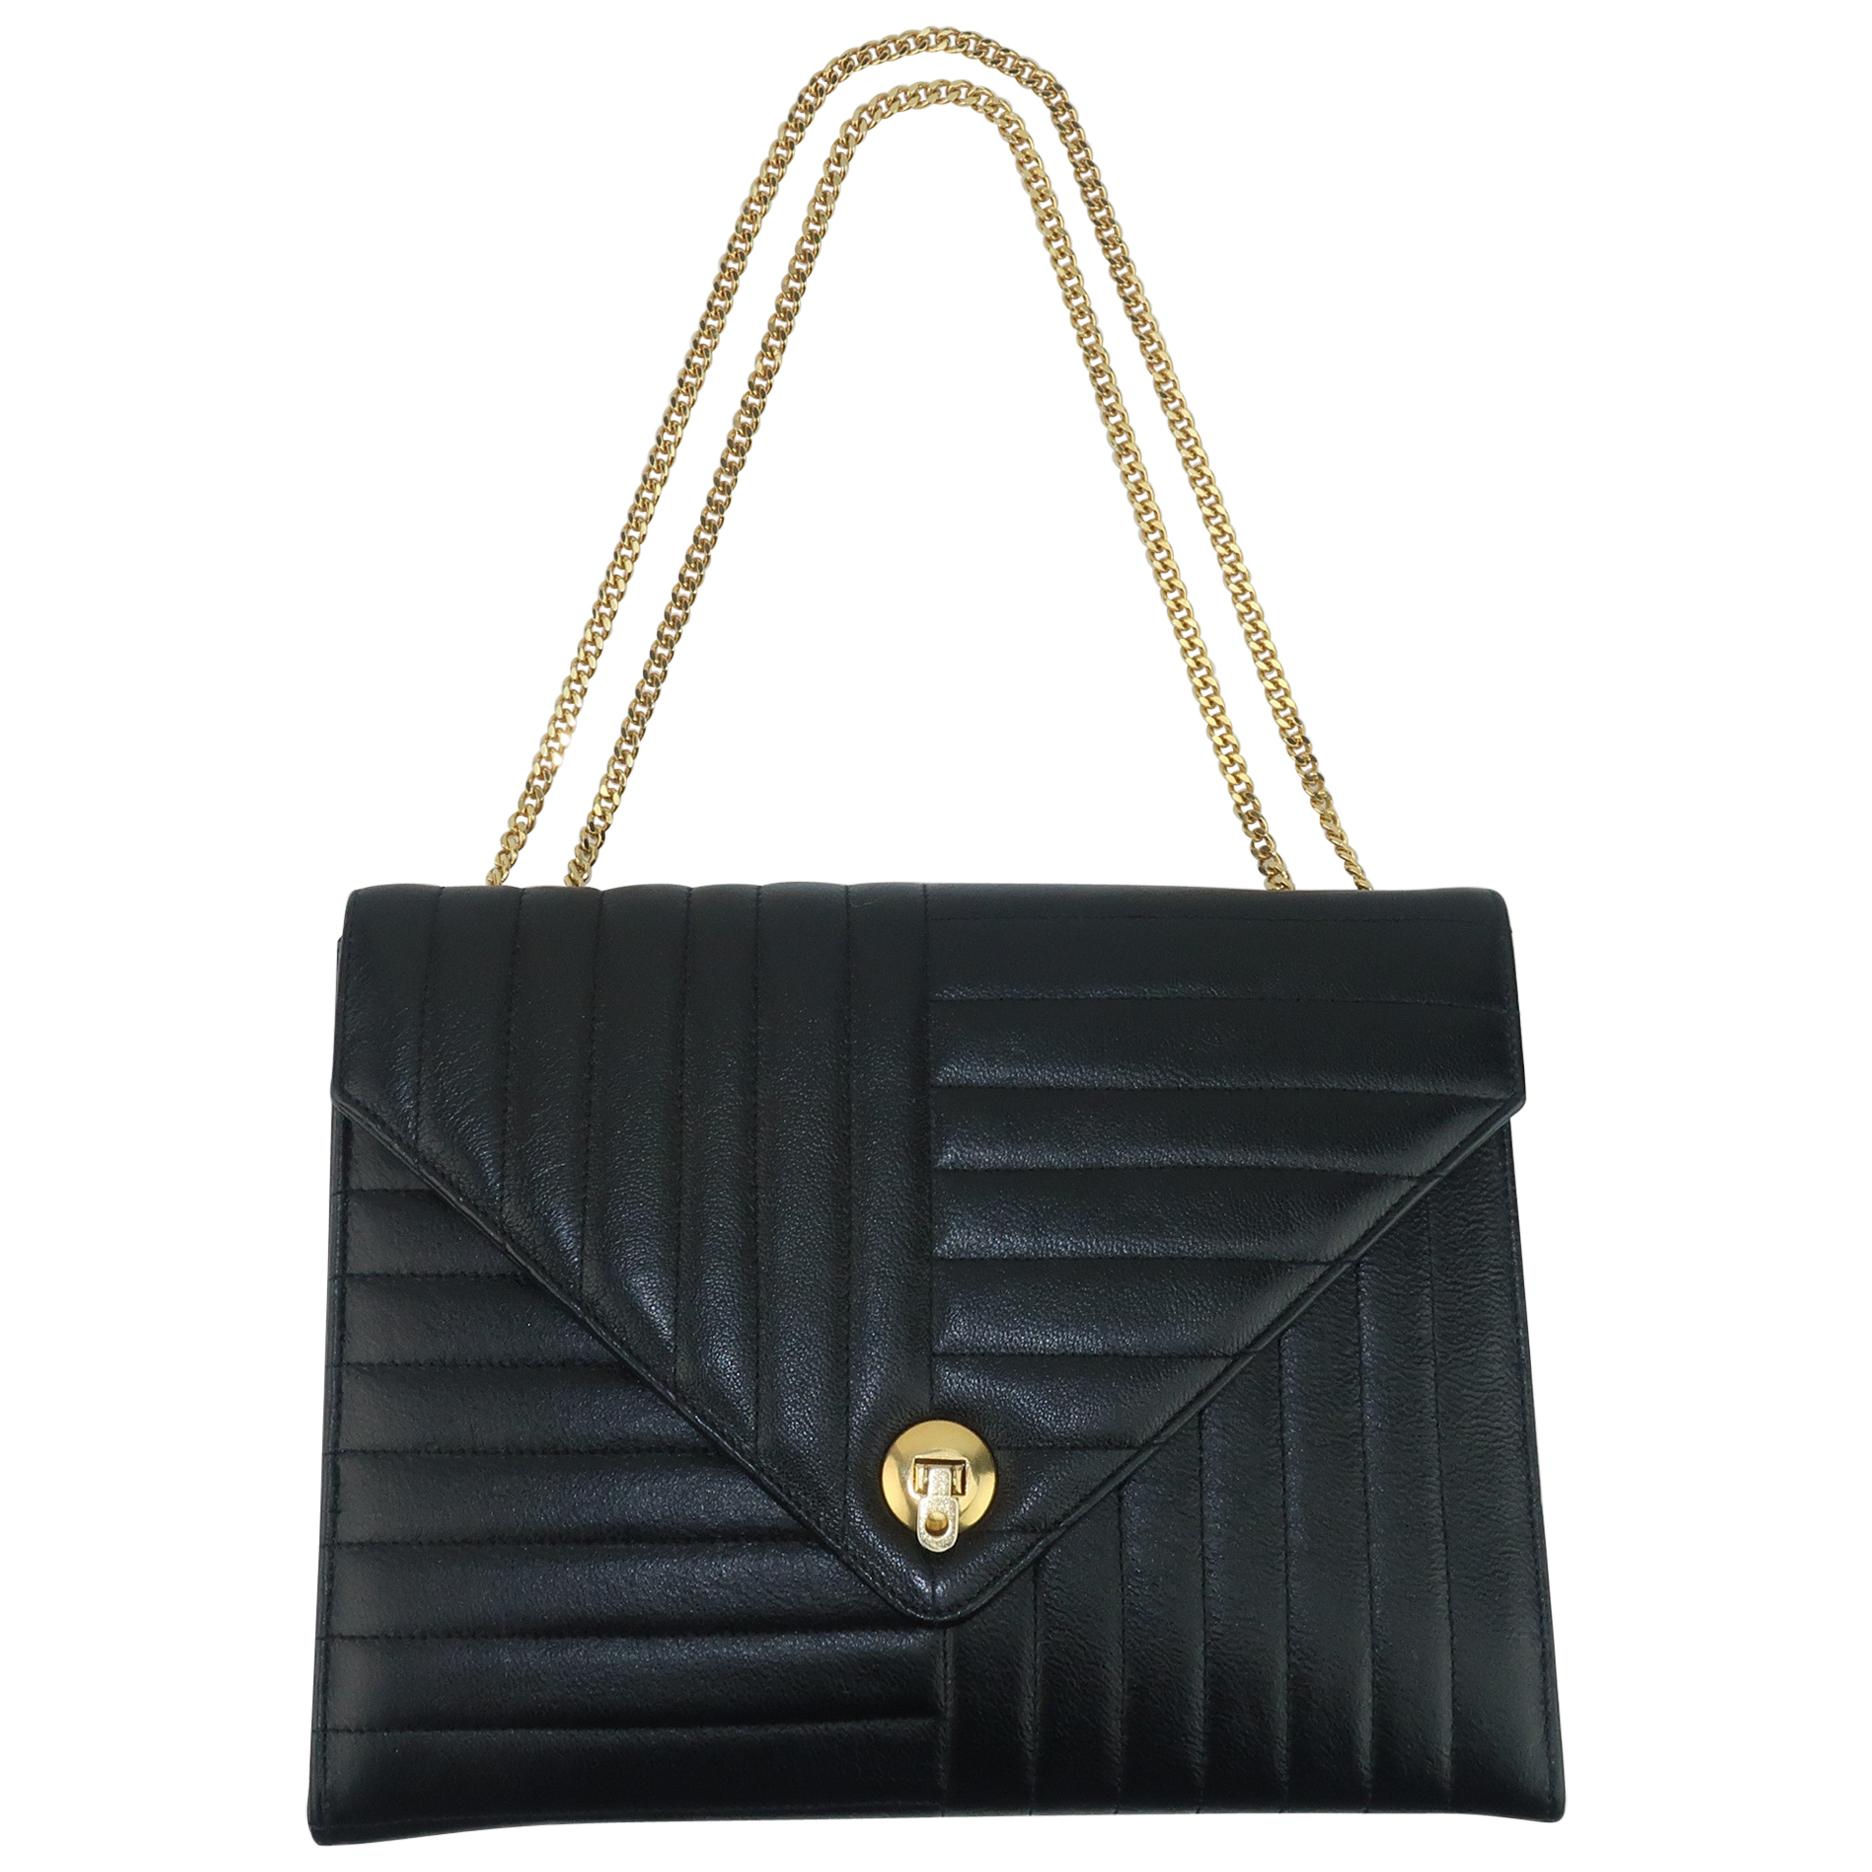 Coblentz Black Leather Handbag With Gold Convertible Chain, 1960's